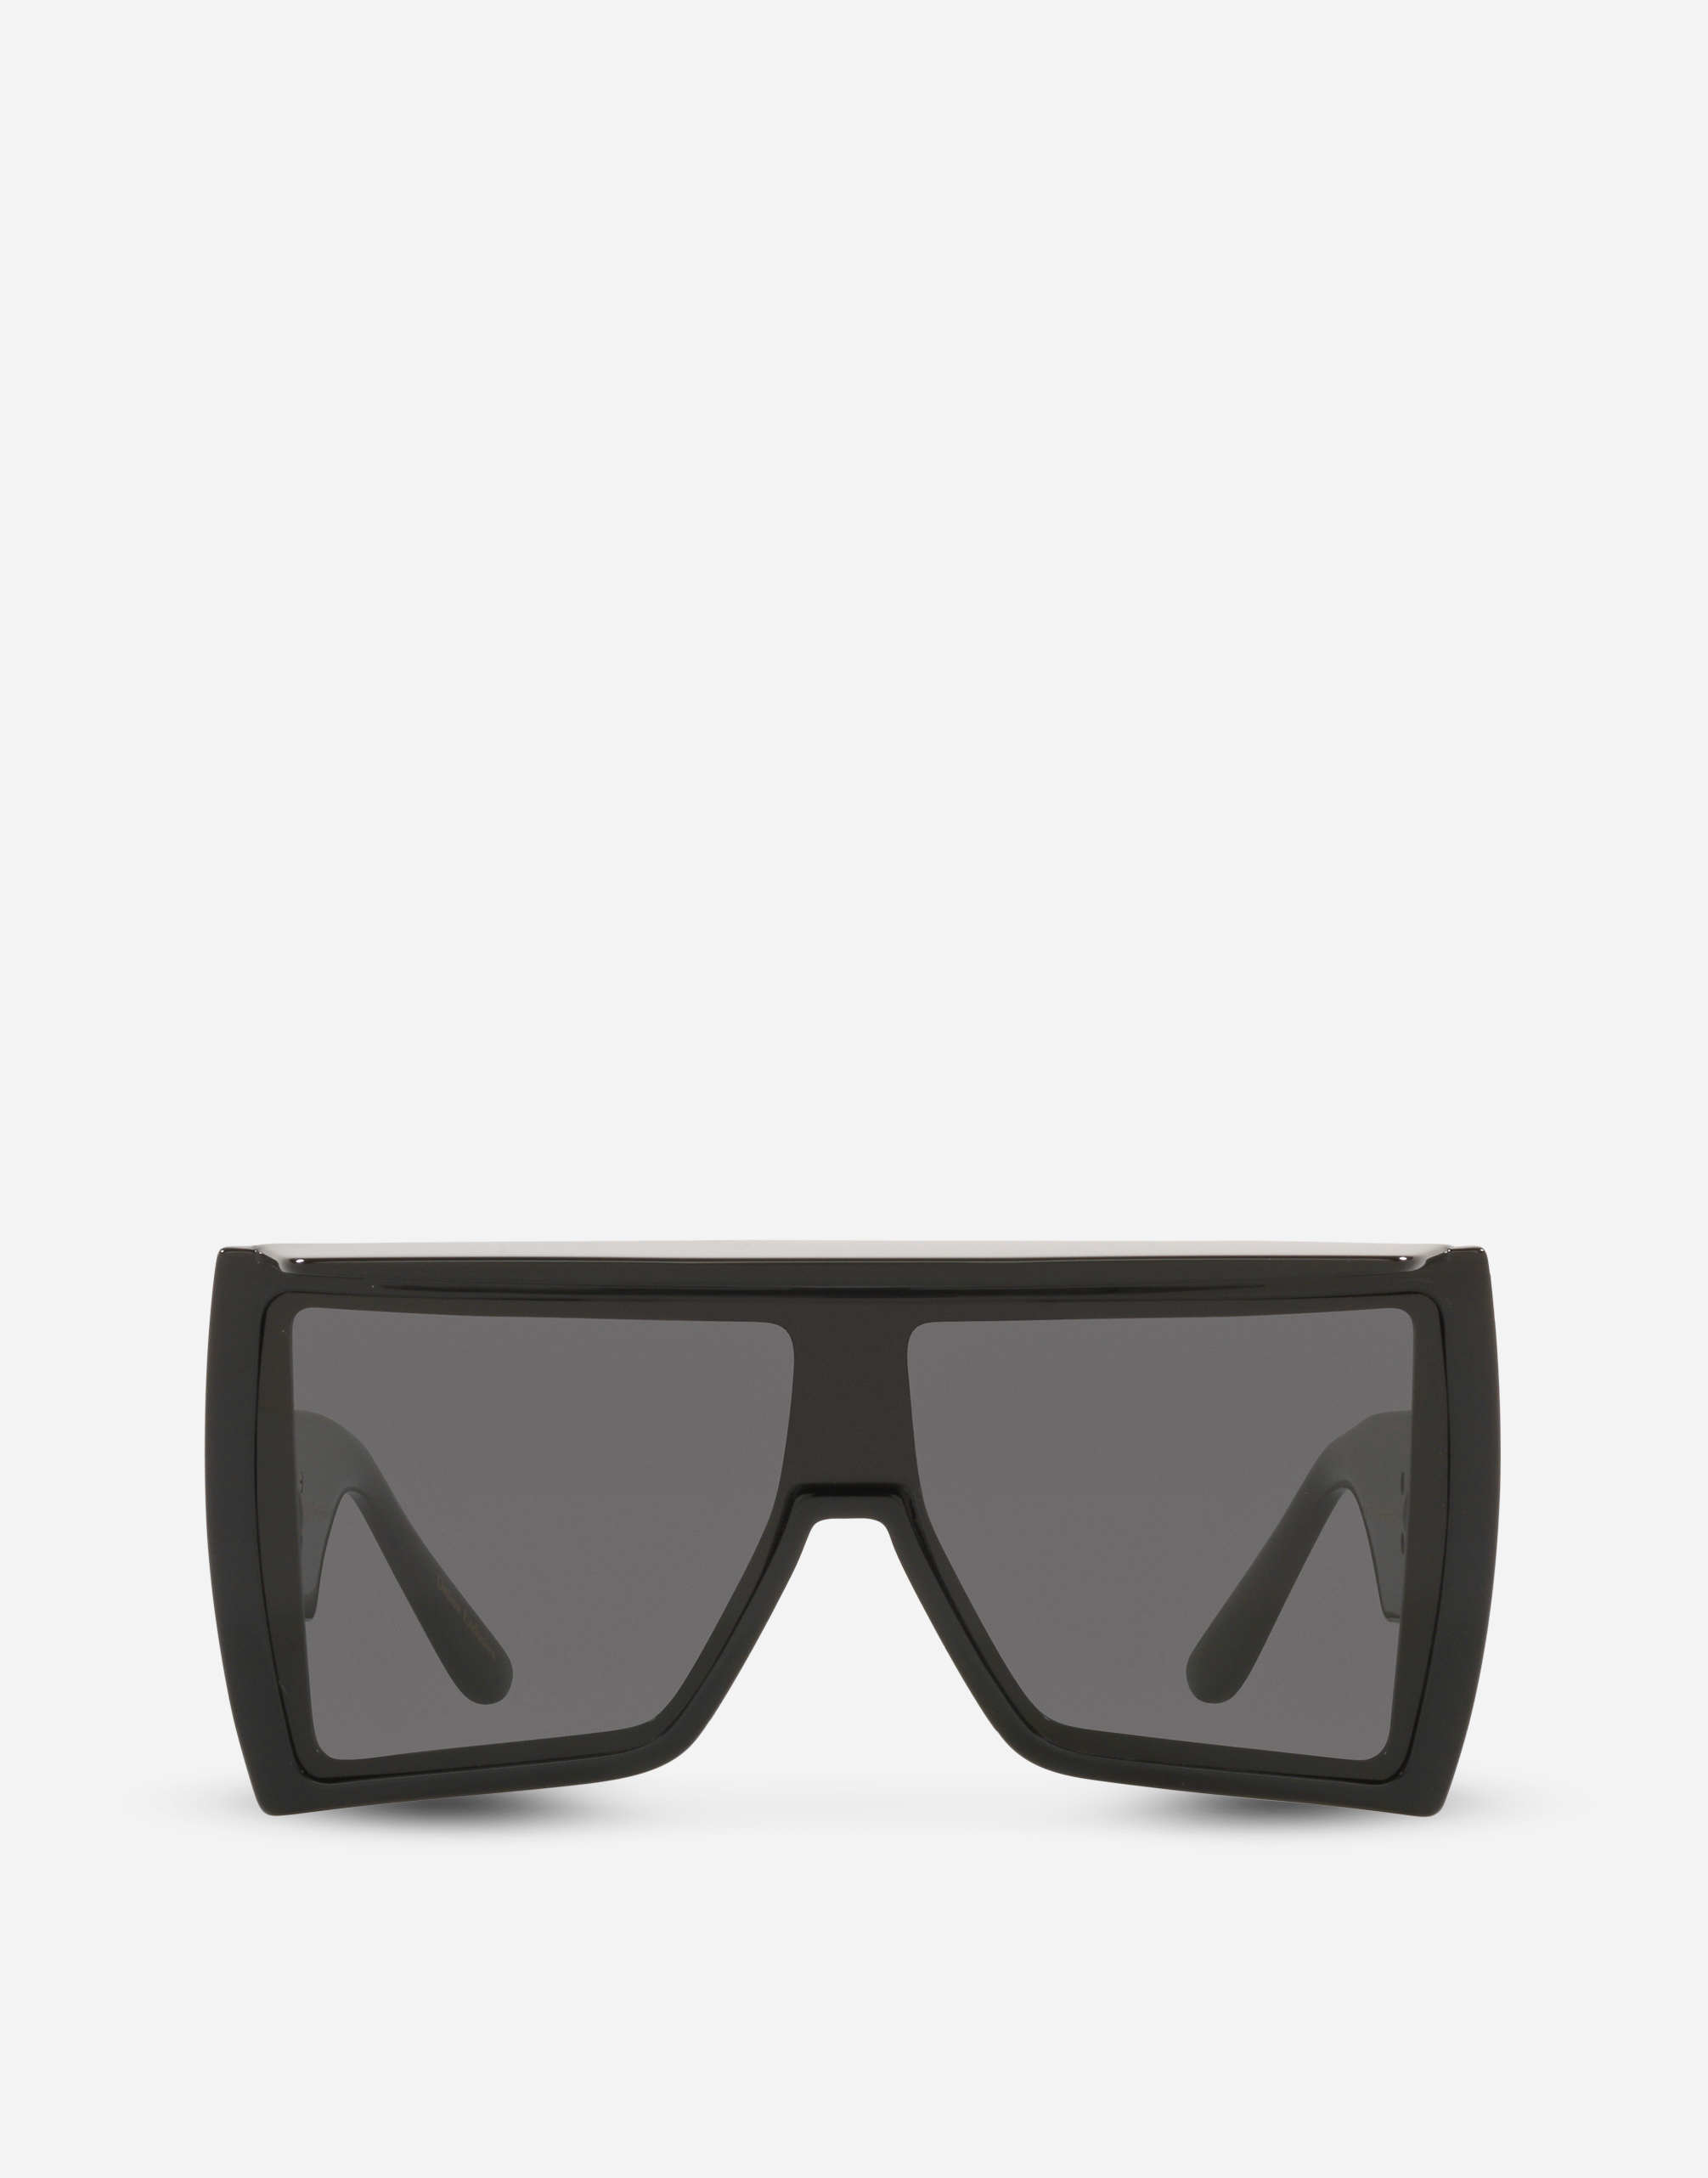 Visor sunglasses in Black